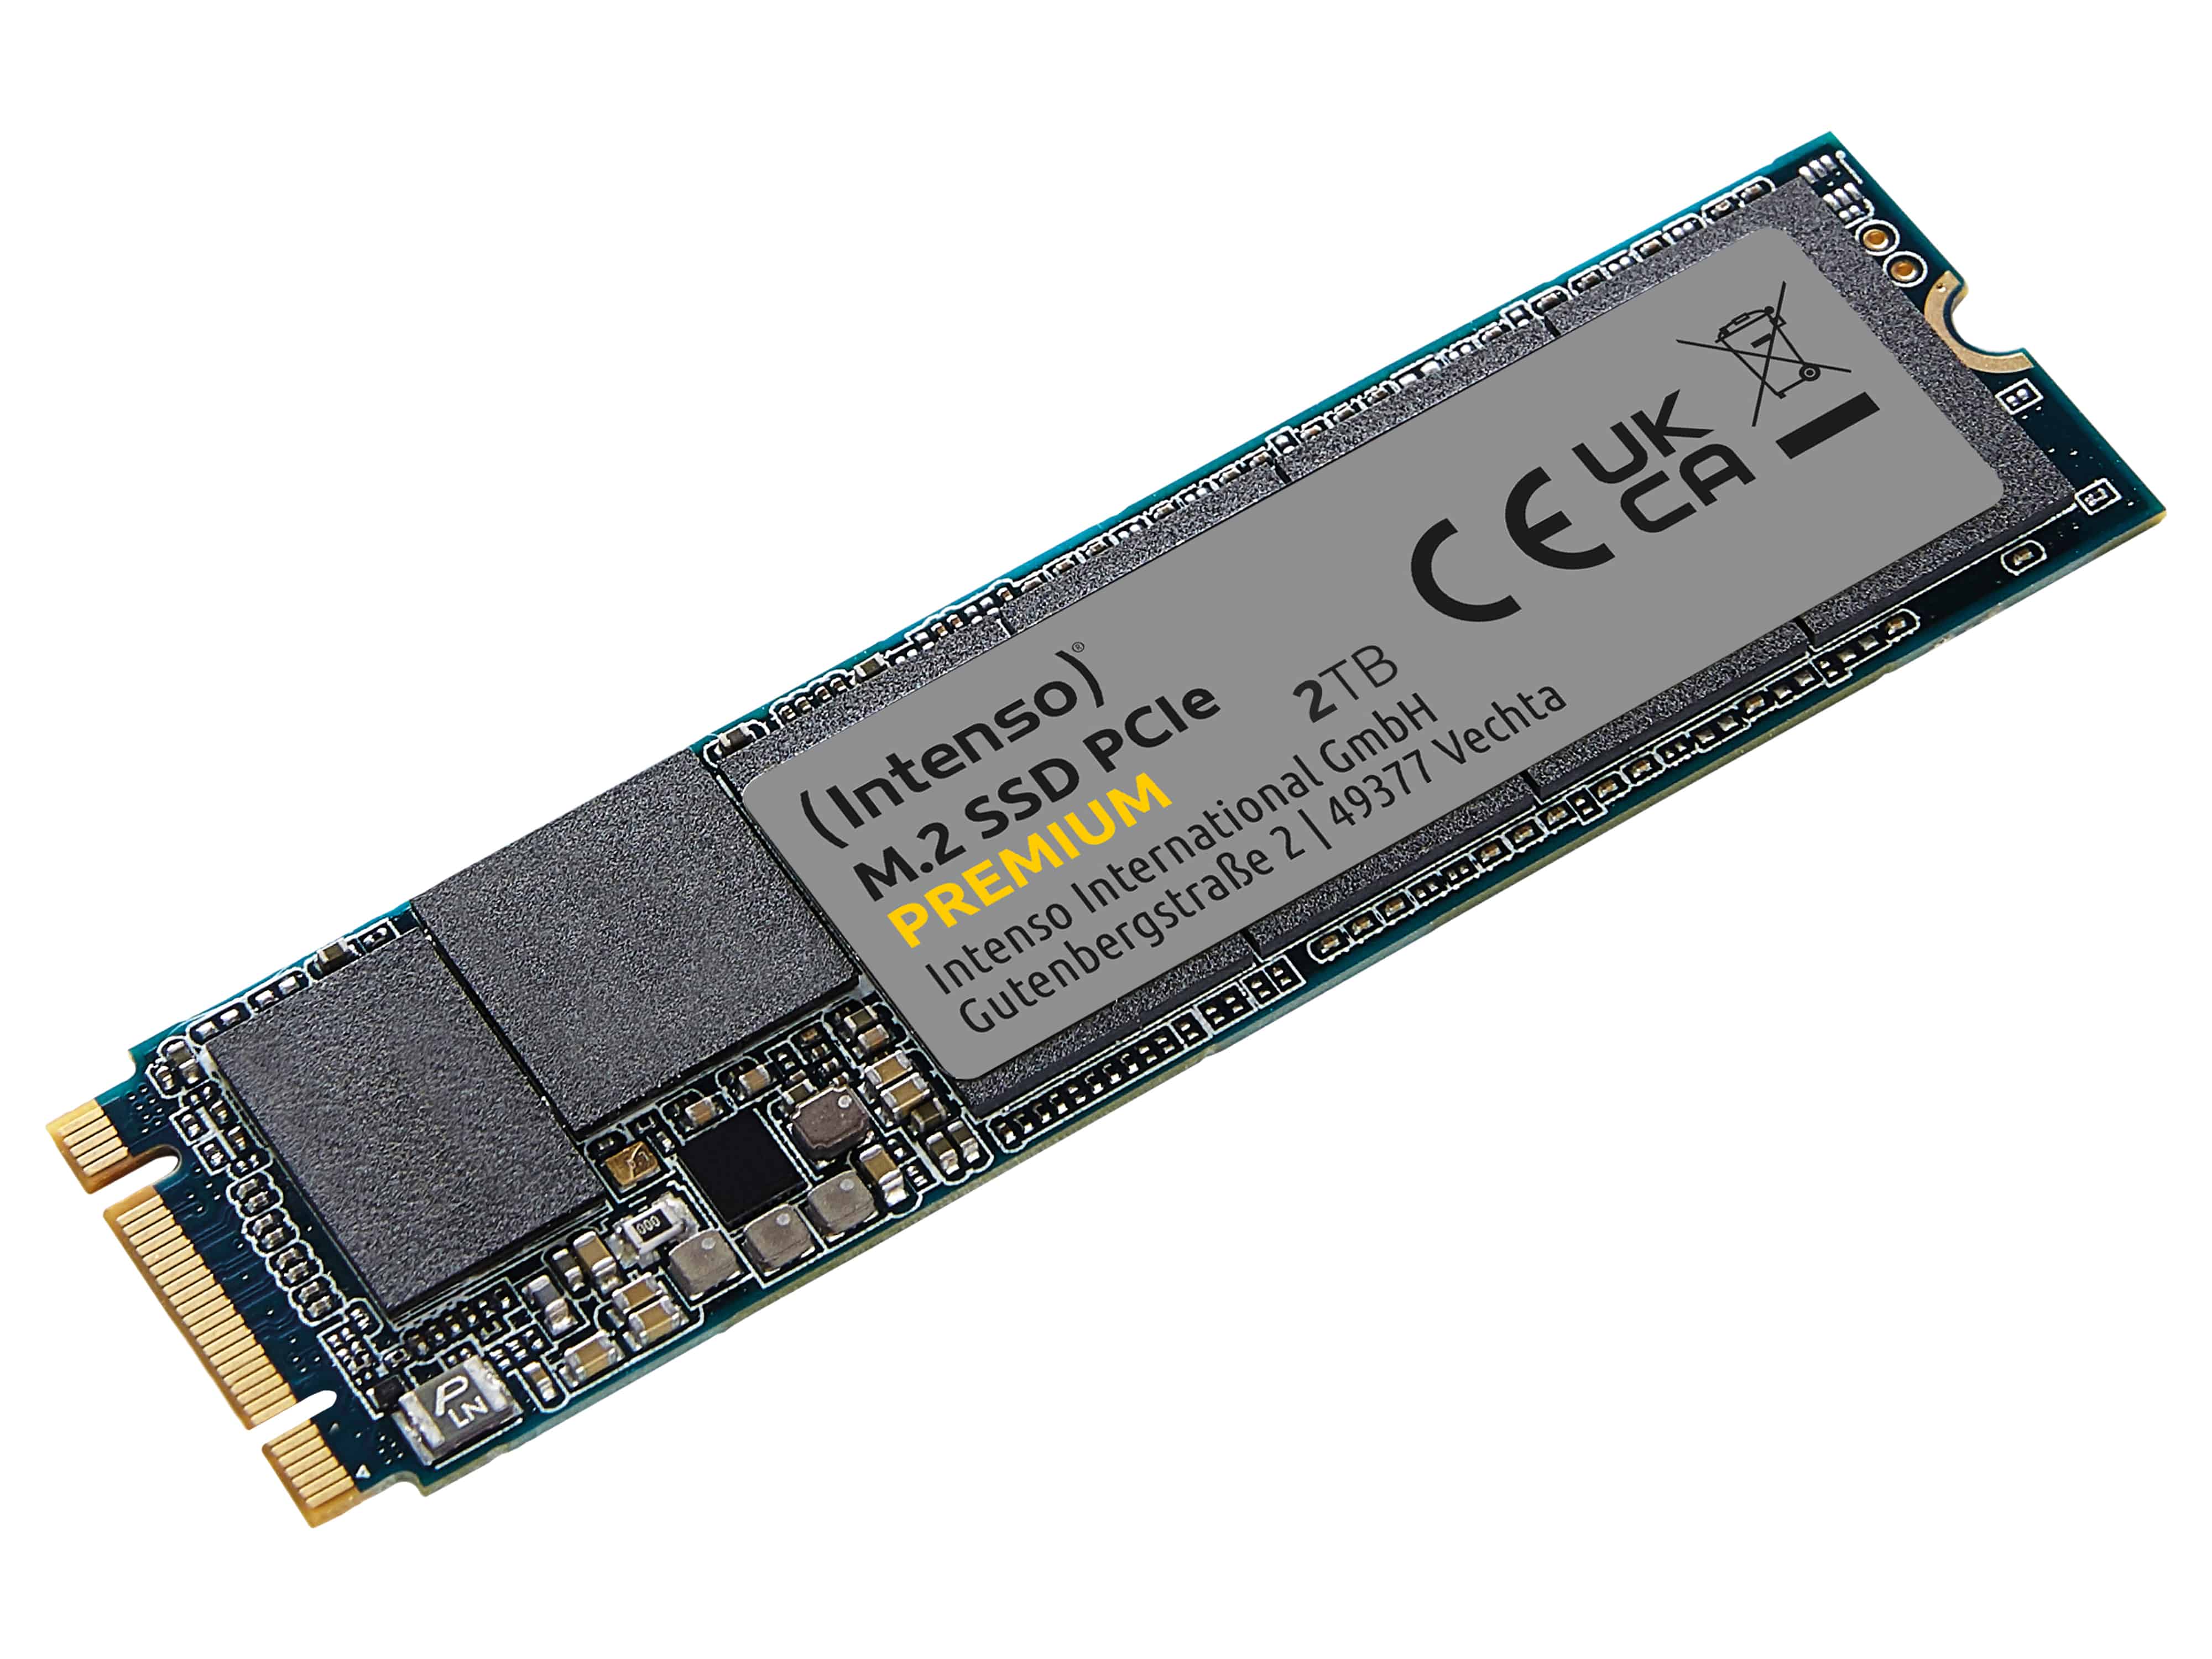 INTENSO M.2 SSD Premium, 2 TB, PCIe